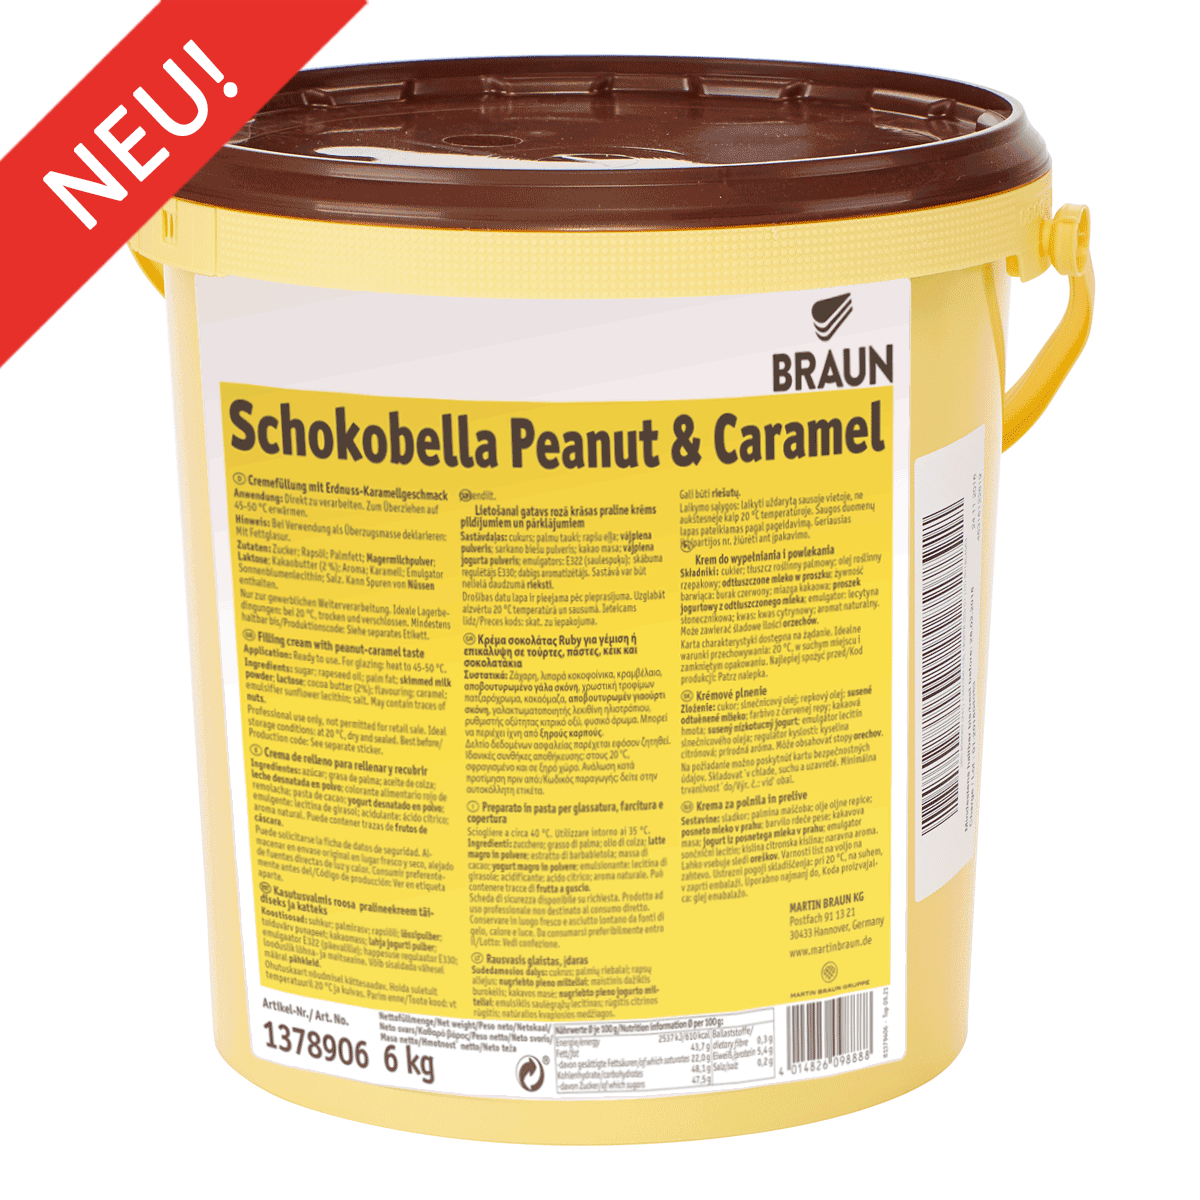 Schokobella Peanut & Caramel